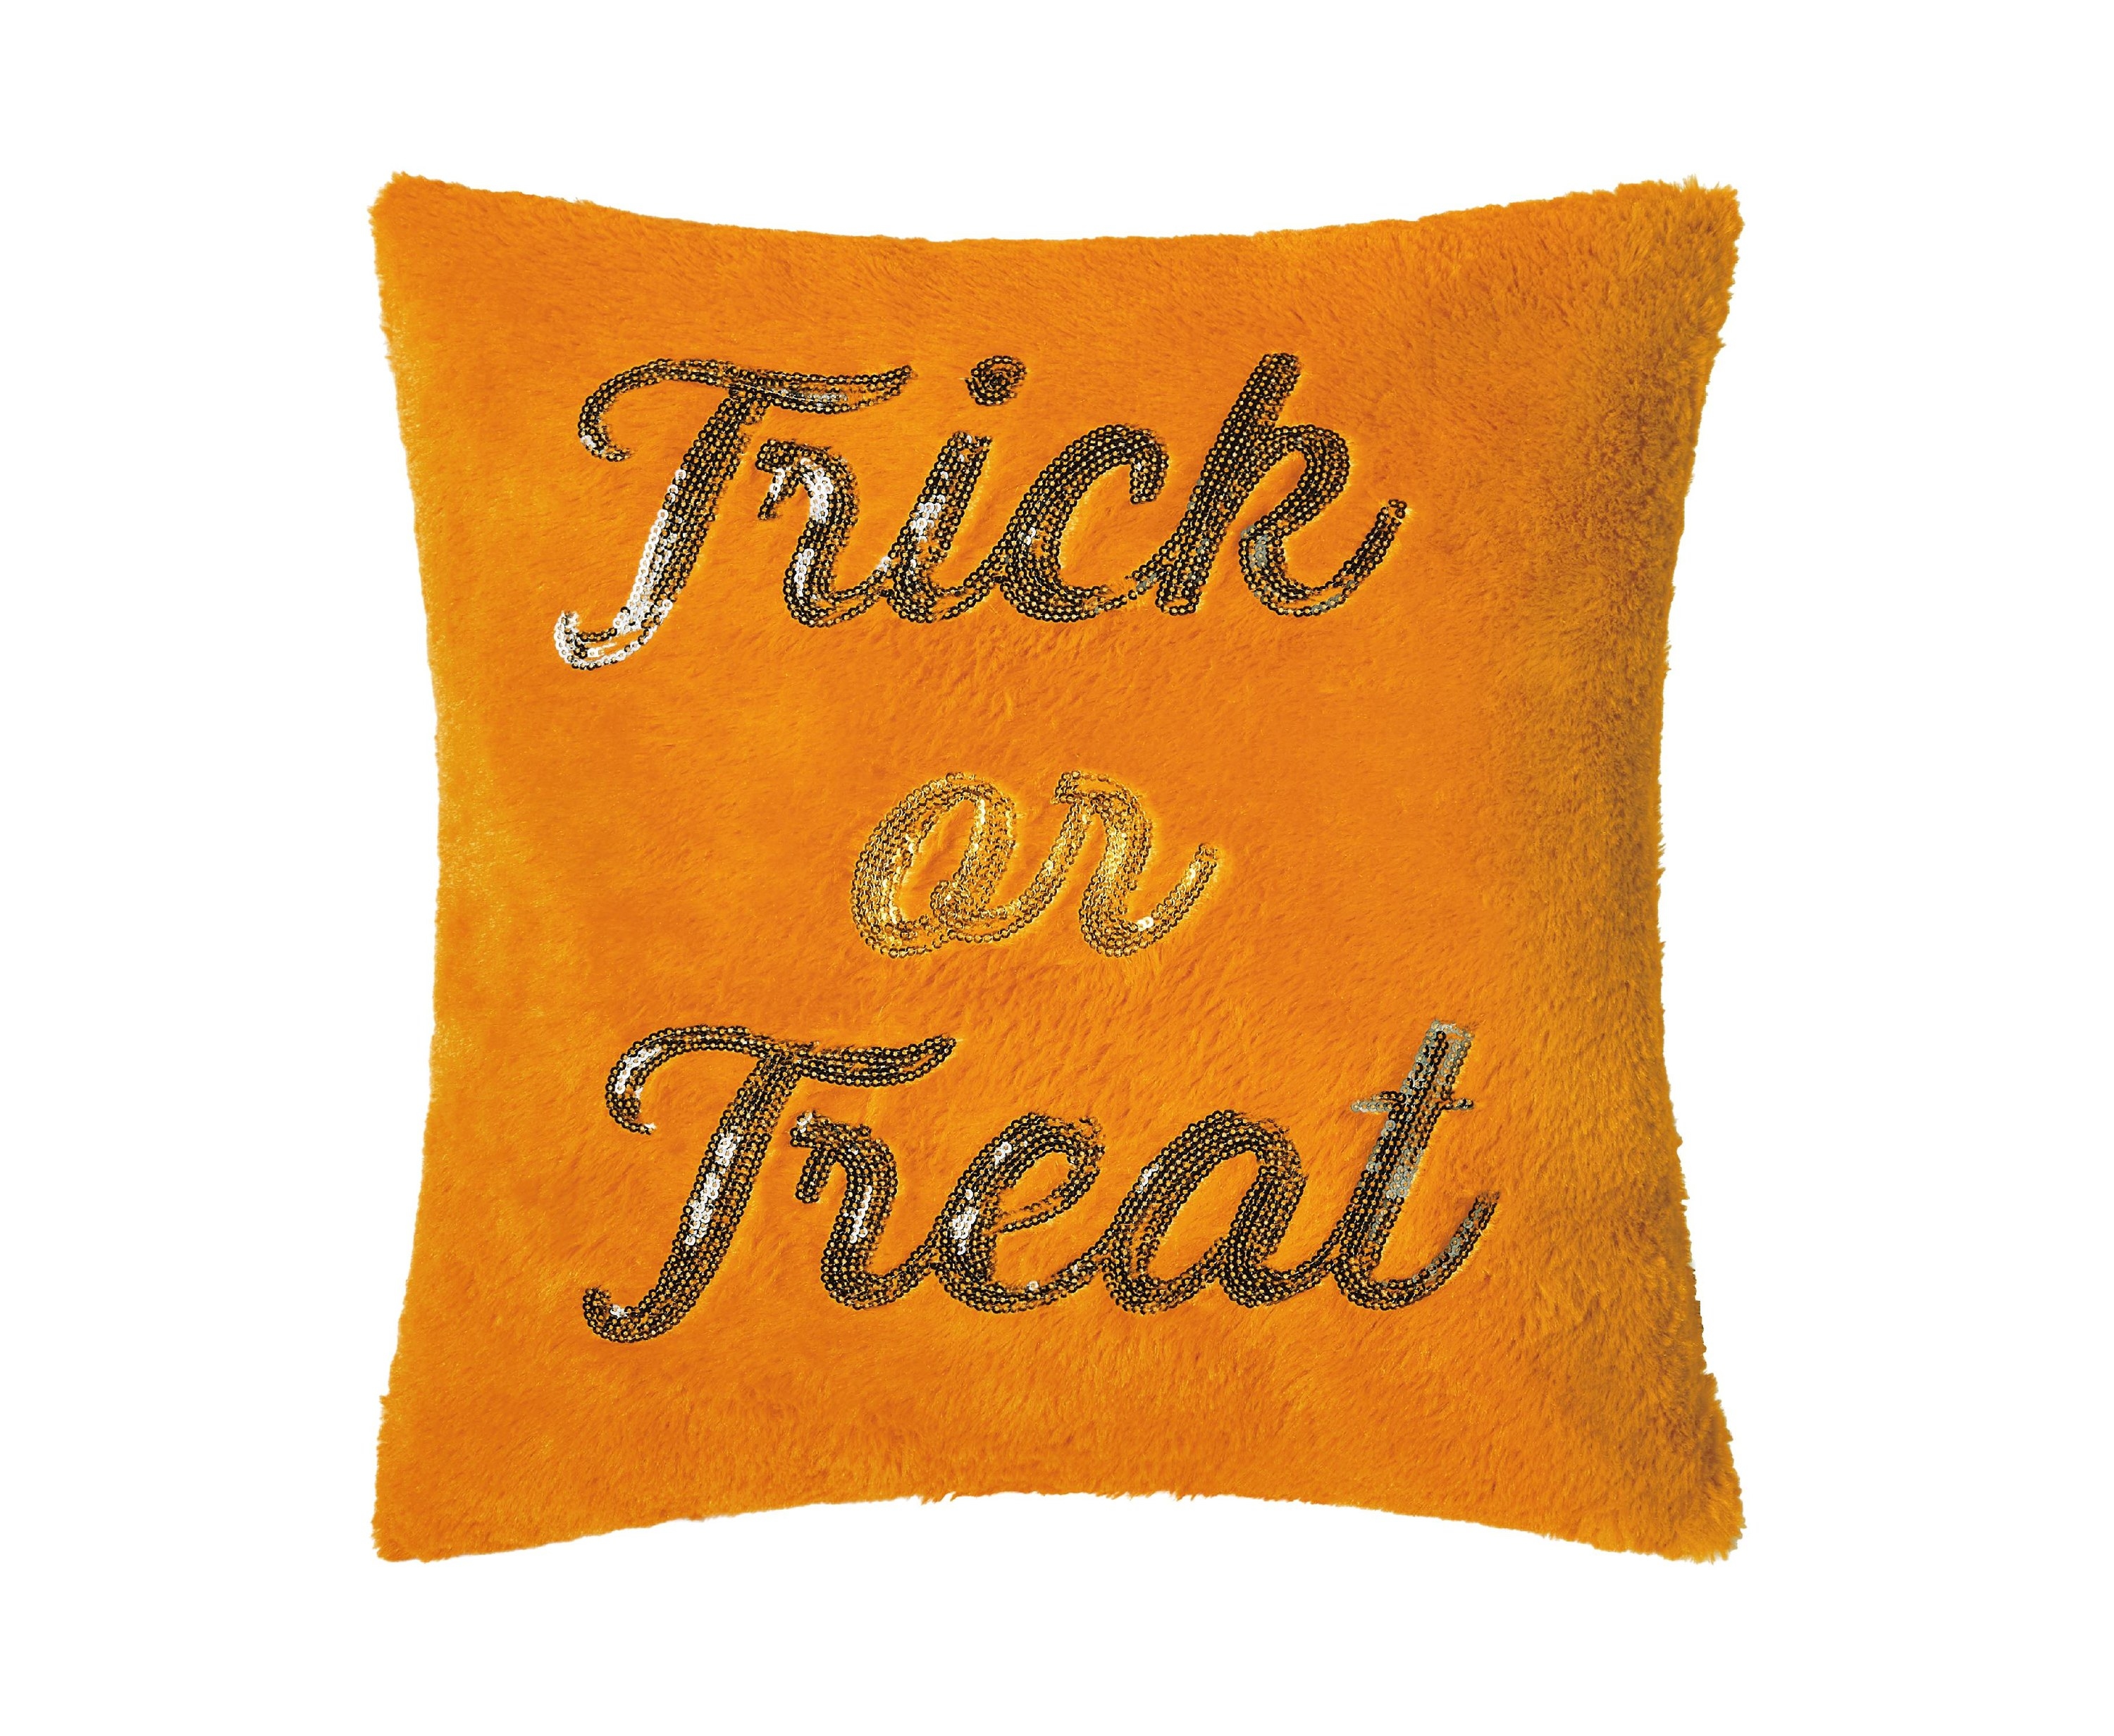 Trick or treat orange sequin throw pillow